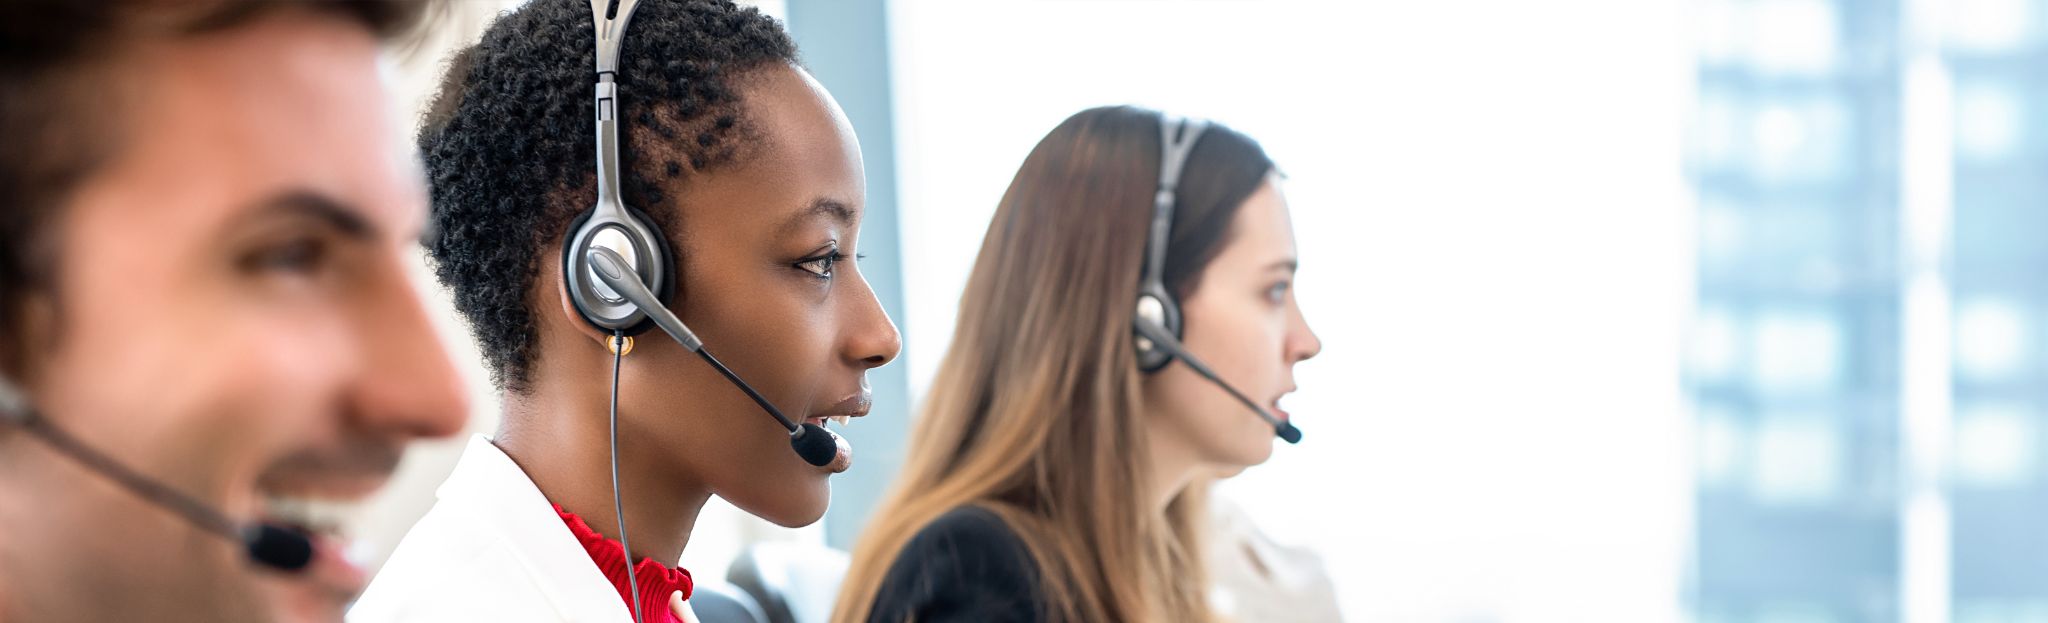 telemarketing customer service staff team in call center